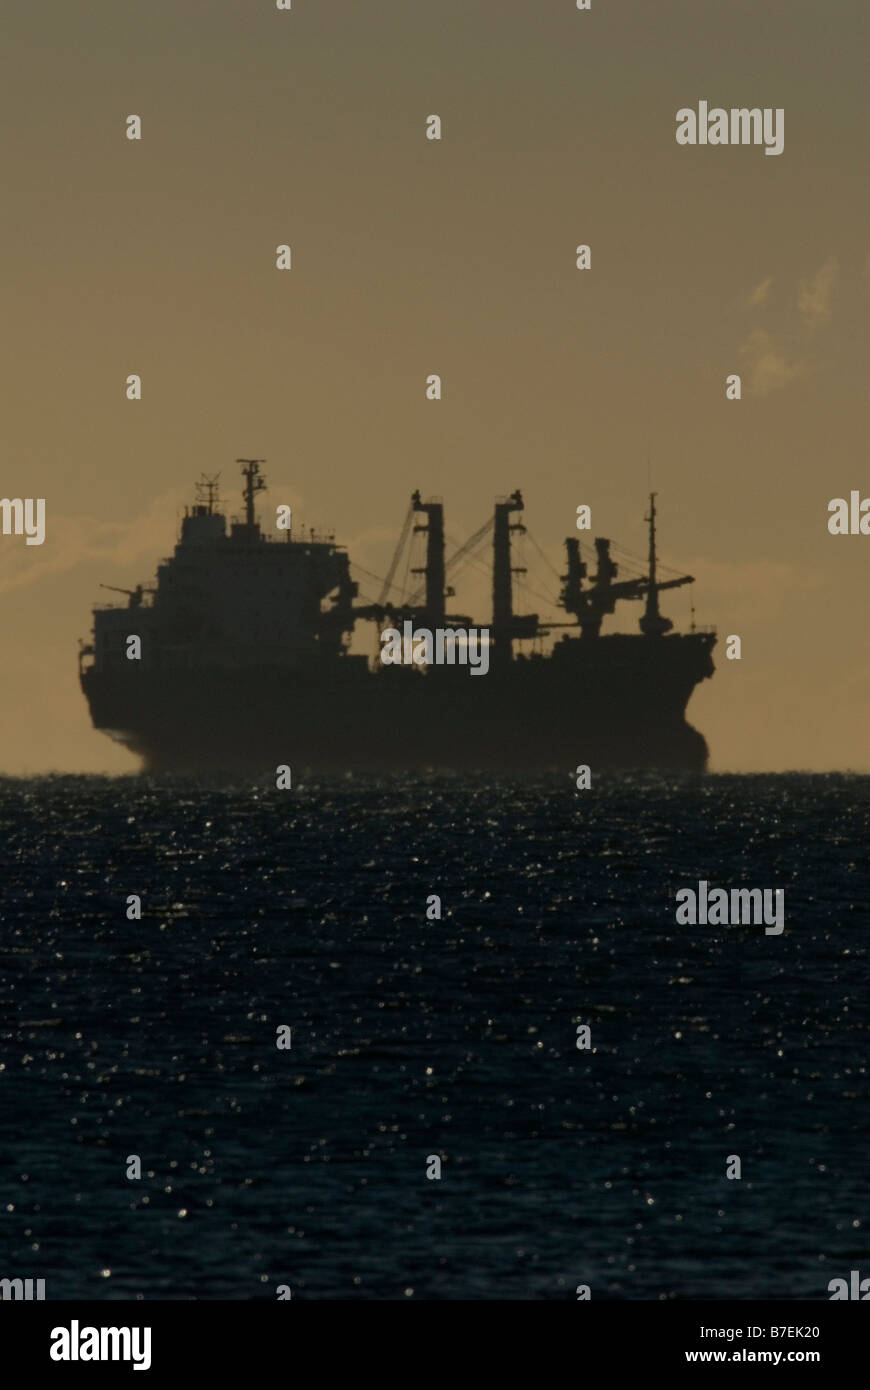 Silhouette of cargo ship at sea Stock Photo